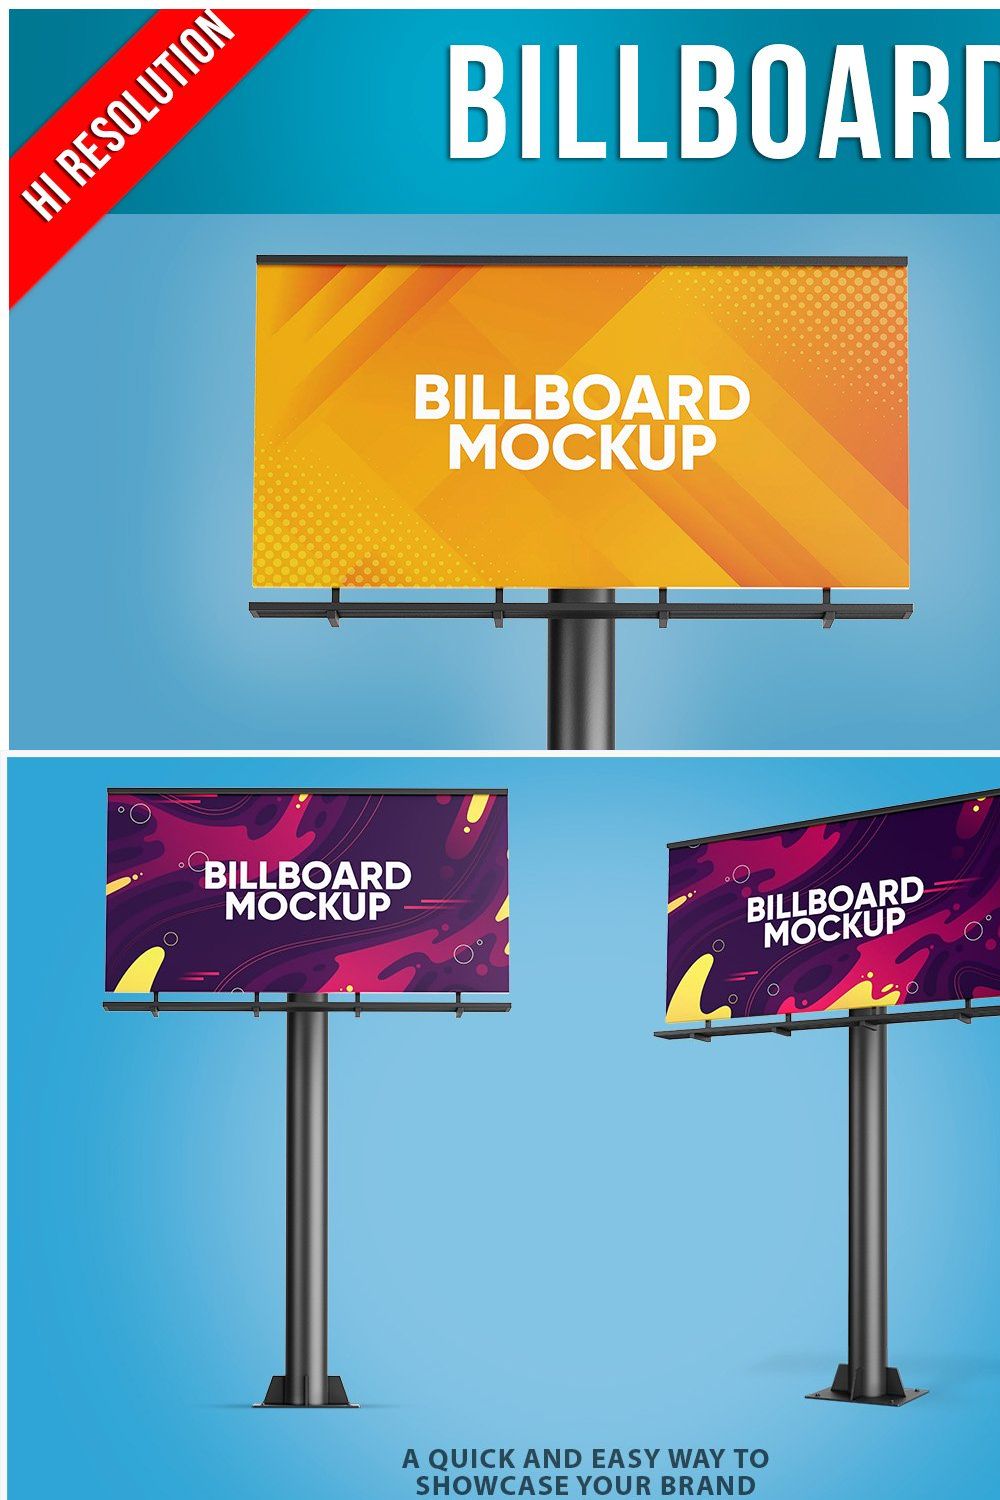 Billboard Mockup - 2 Views pinterest preview image.